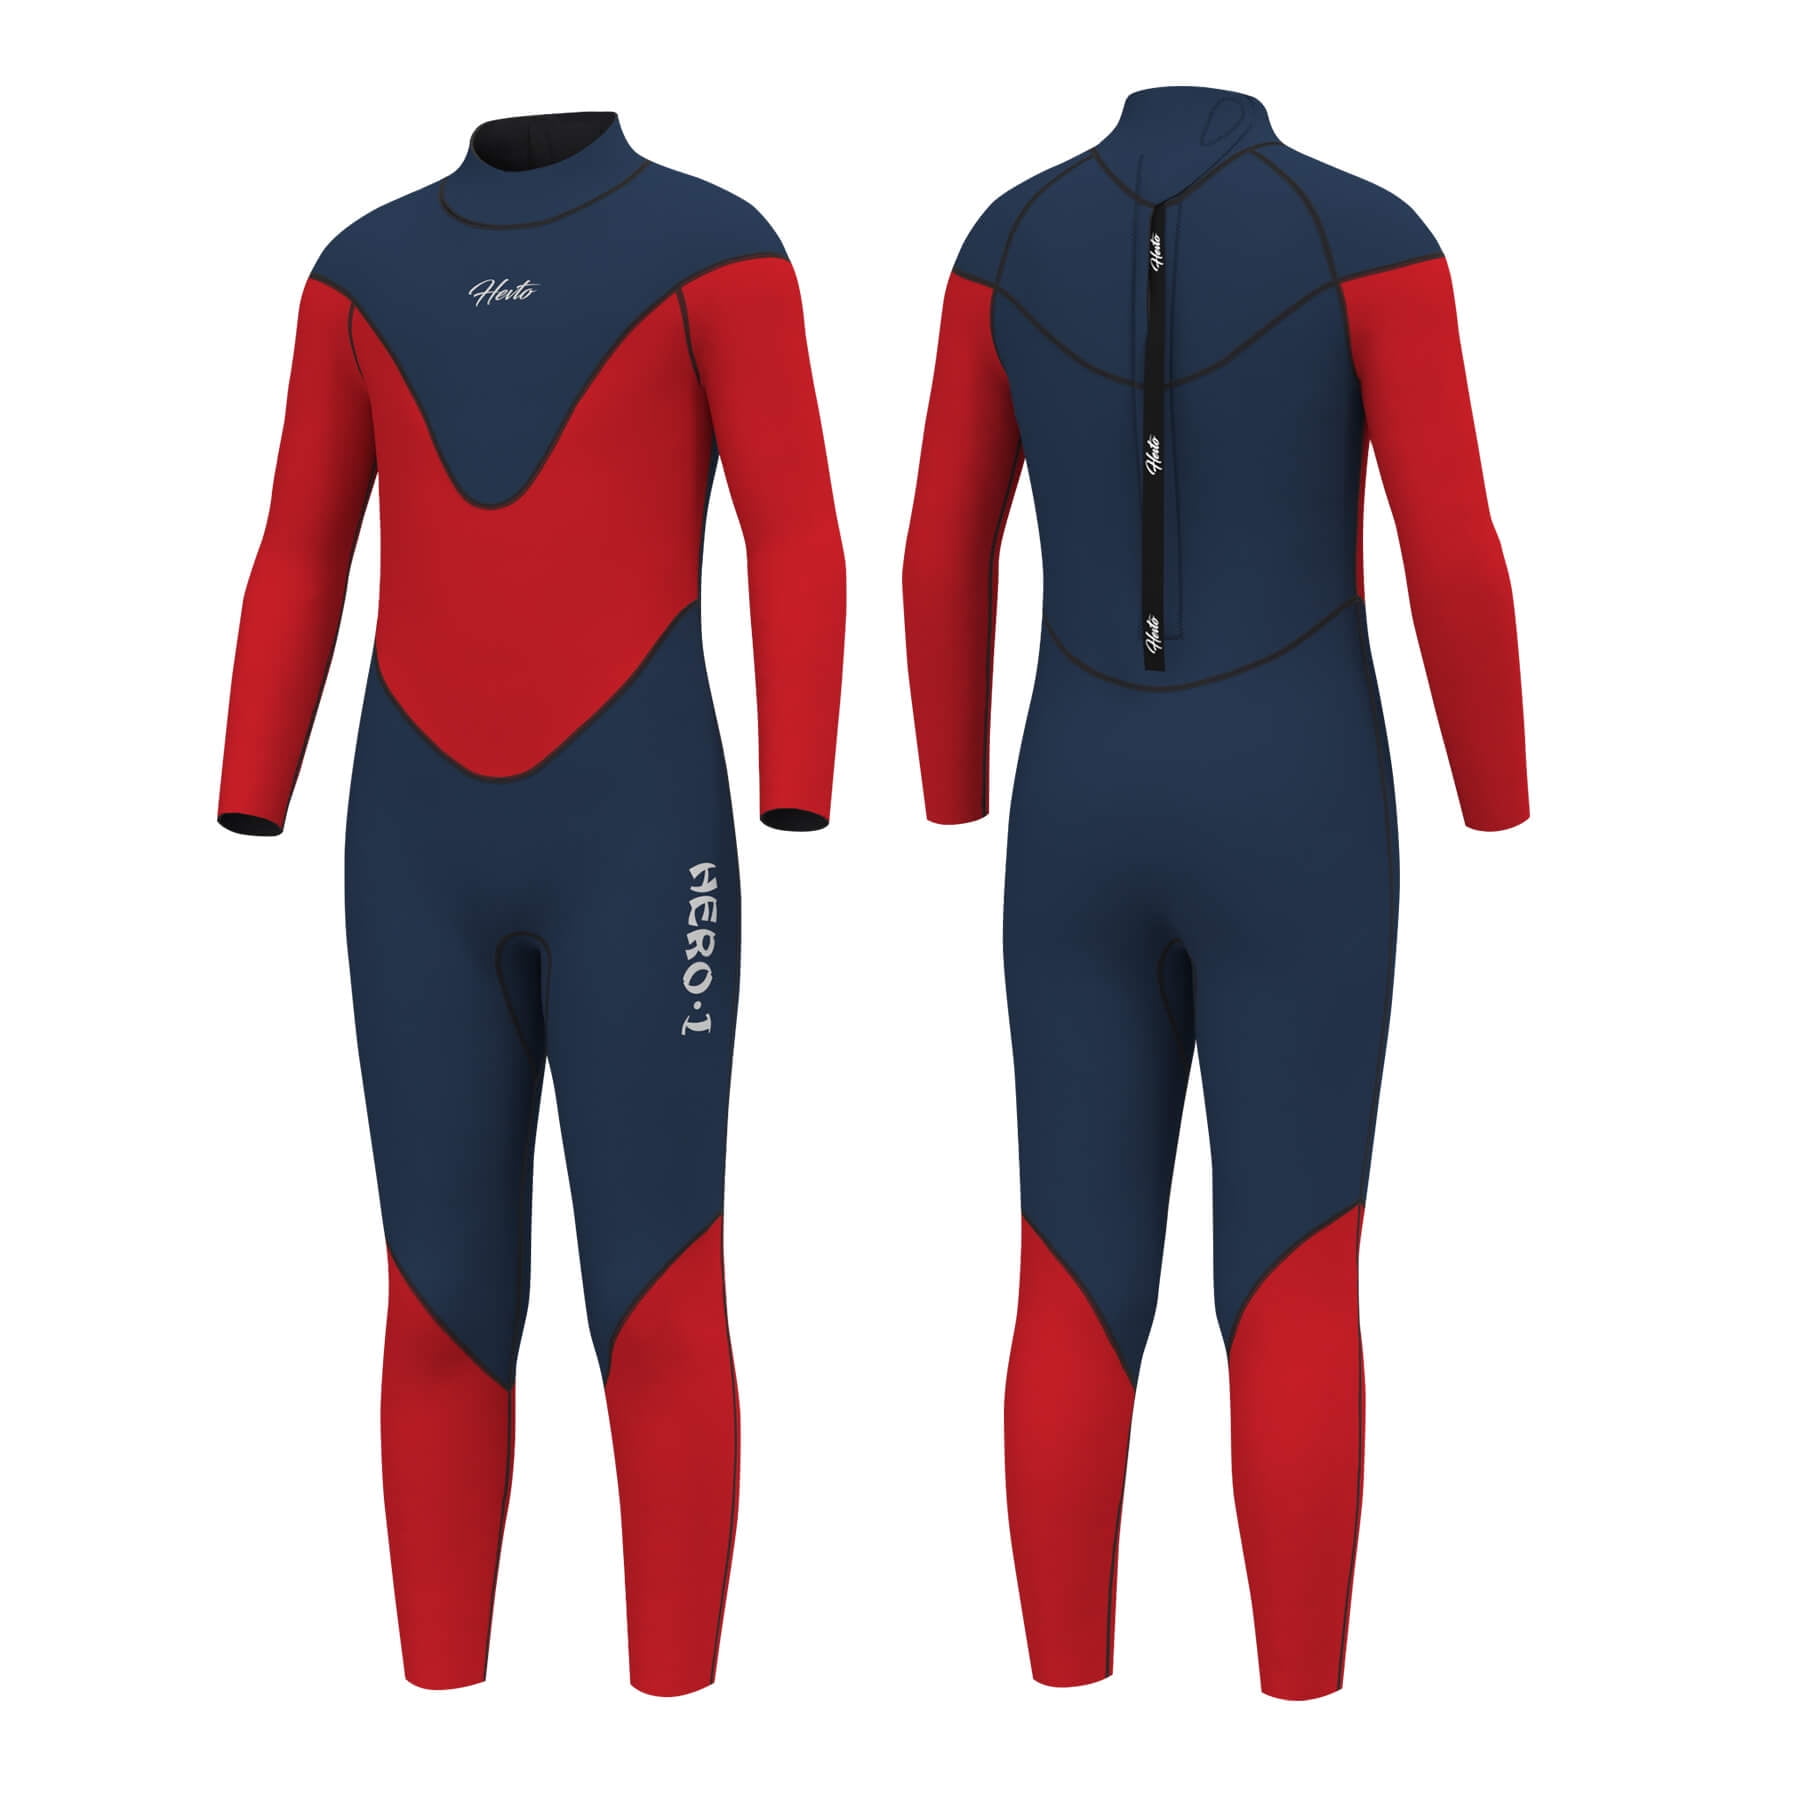 Greatever Wetsuit for Men Women,3mm Neoprene Full Body Keep Warm Long Sleeve Back Zip Full Scuba Diving Suit UV Protection,for Surfing Snorkeling Kayaking Water Sports 